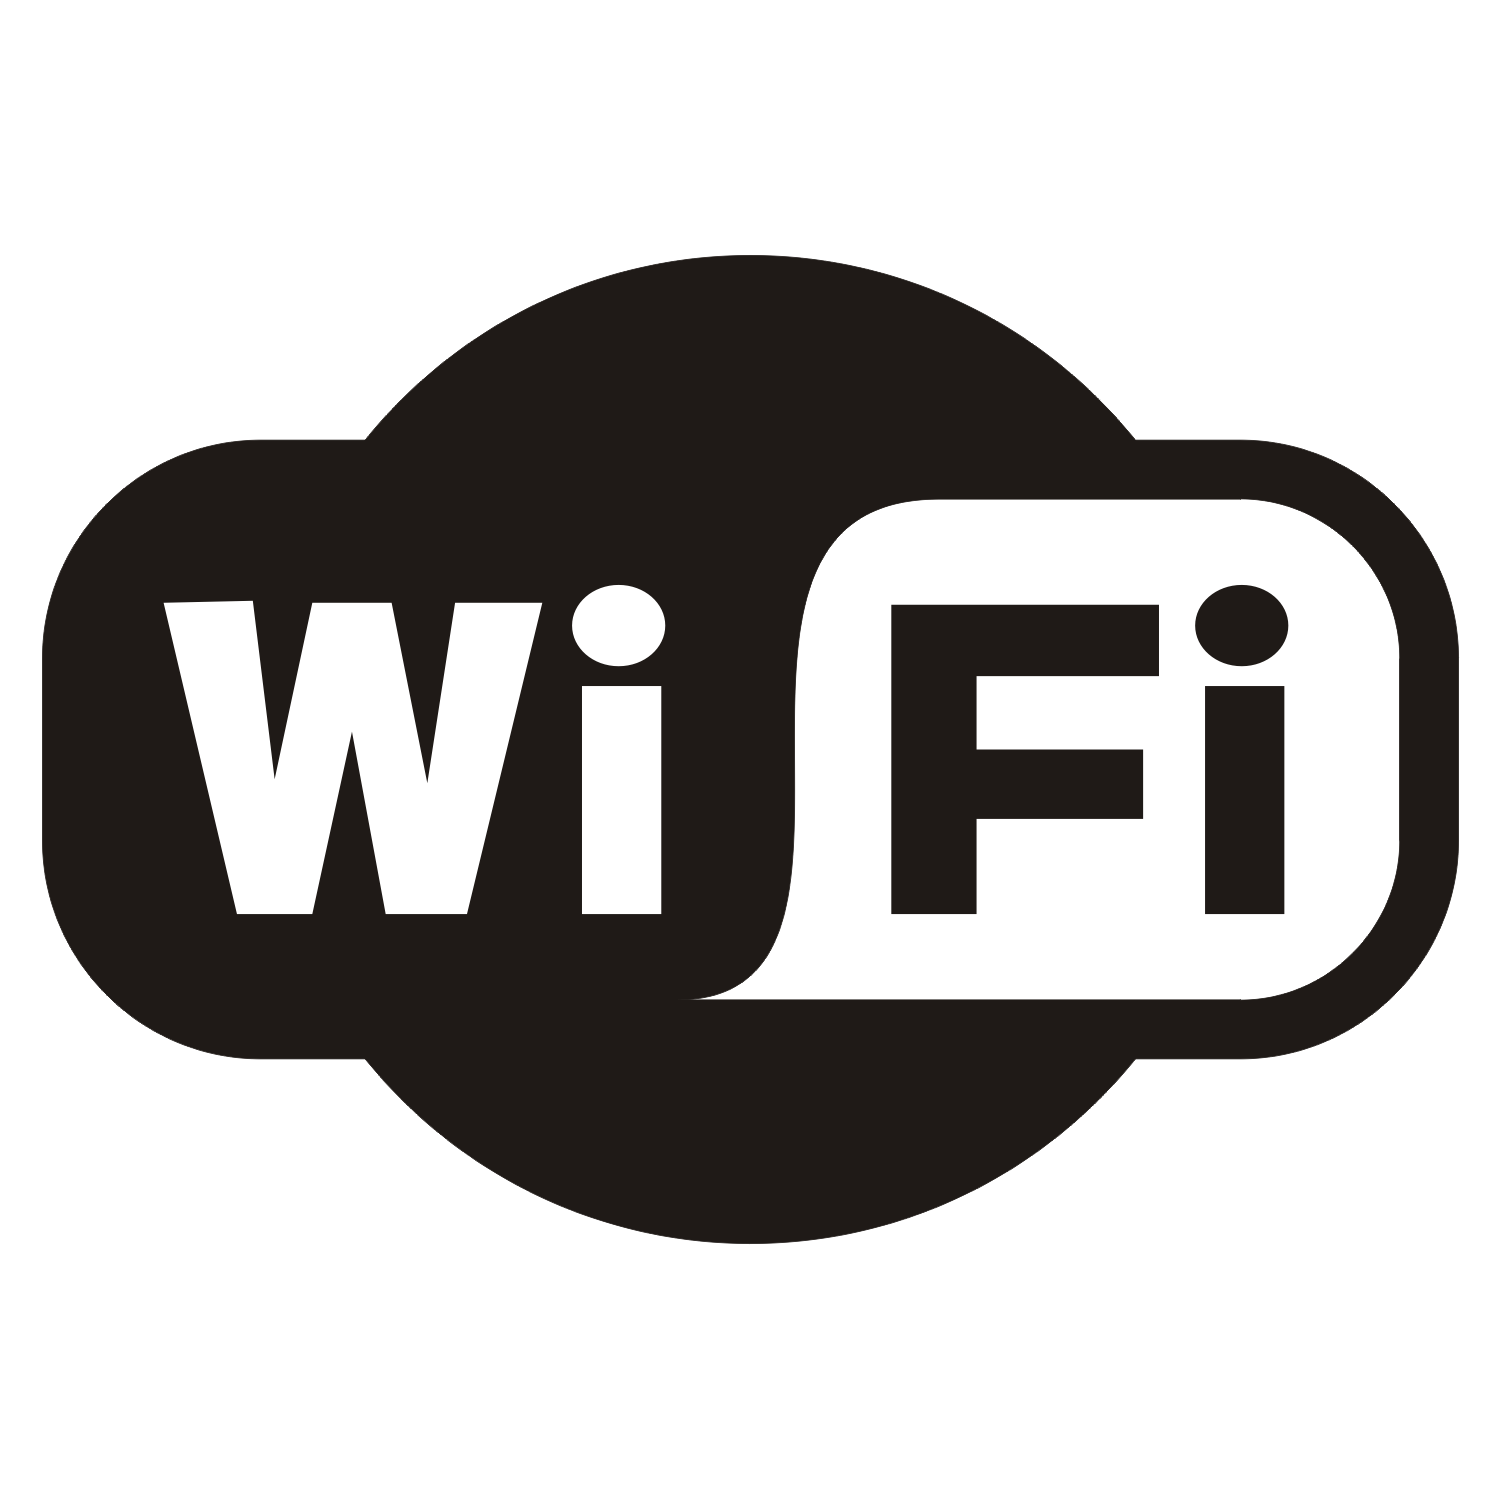 Free Free Wifi Logo, Download Free Clip Art, Free Clip Art on.